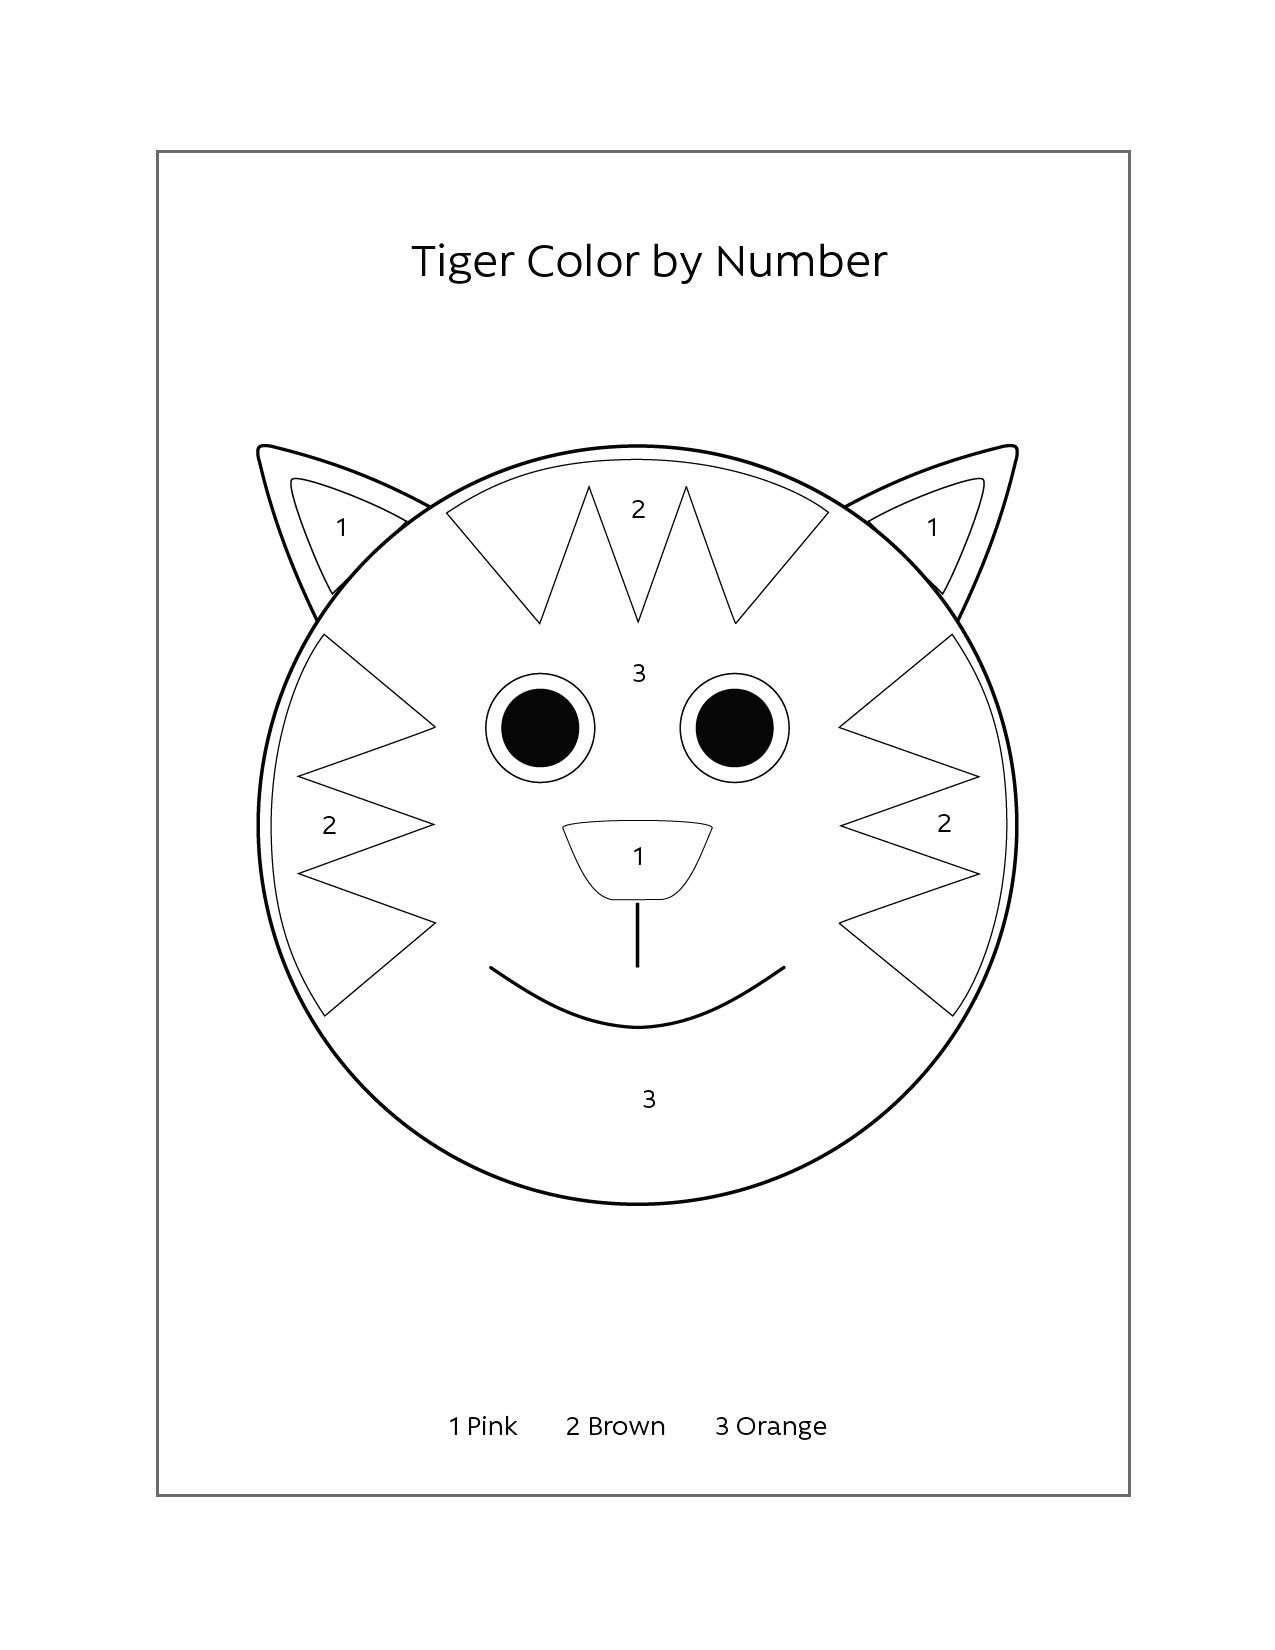 Tiger Color By Number